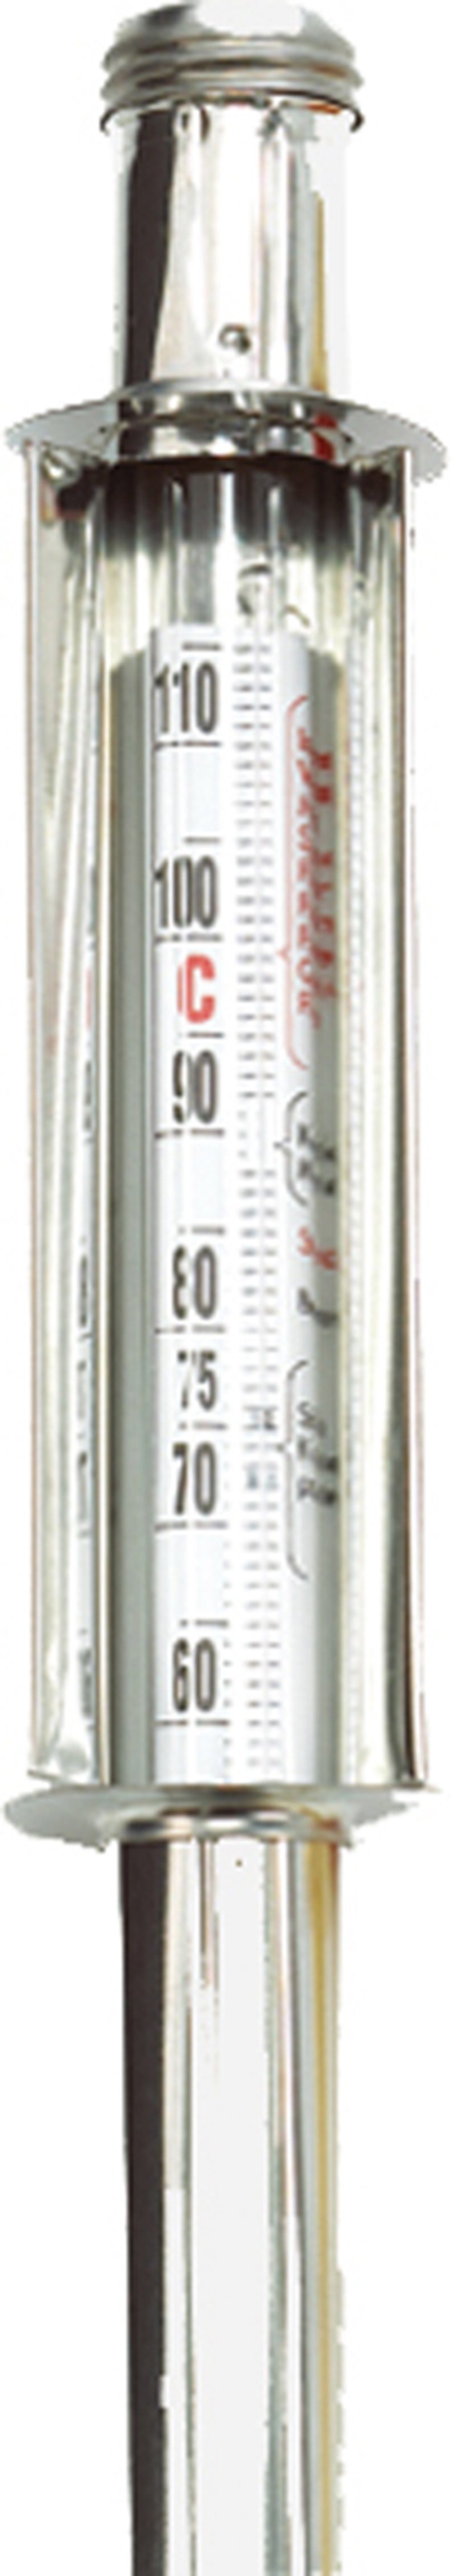 WECK Kochthermometer Einkochthermometer Koch Thermometer